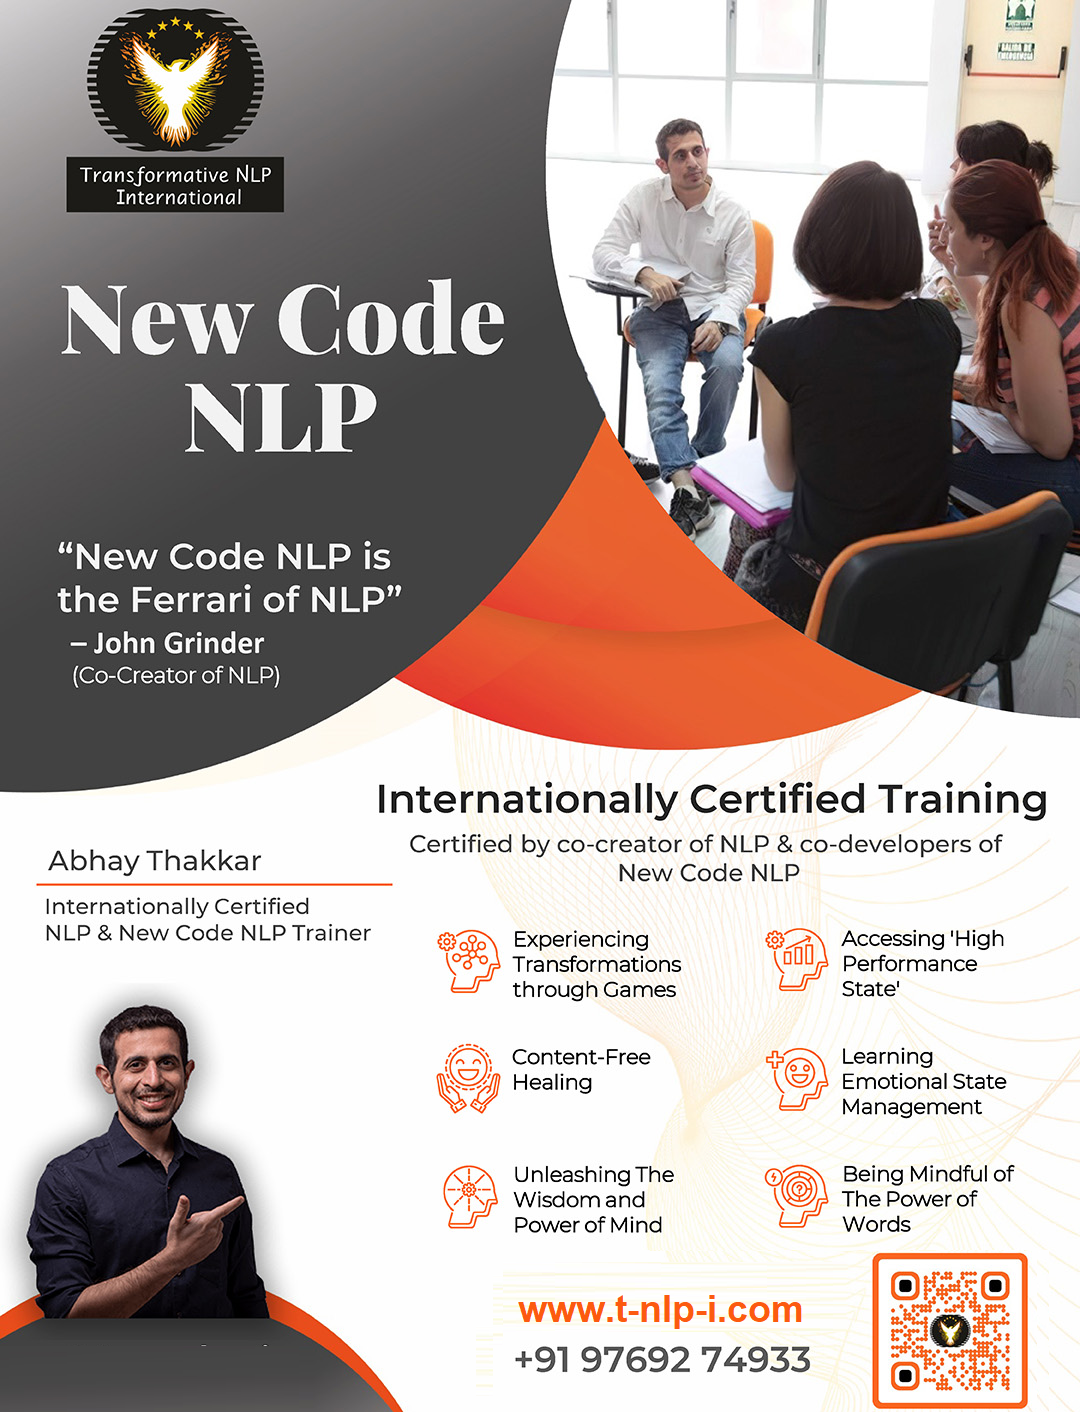 Internationally Certified New Code NLP Training by Abhay Thakkar - Jaipur